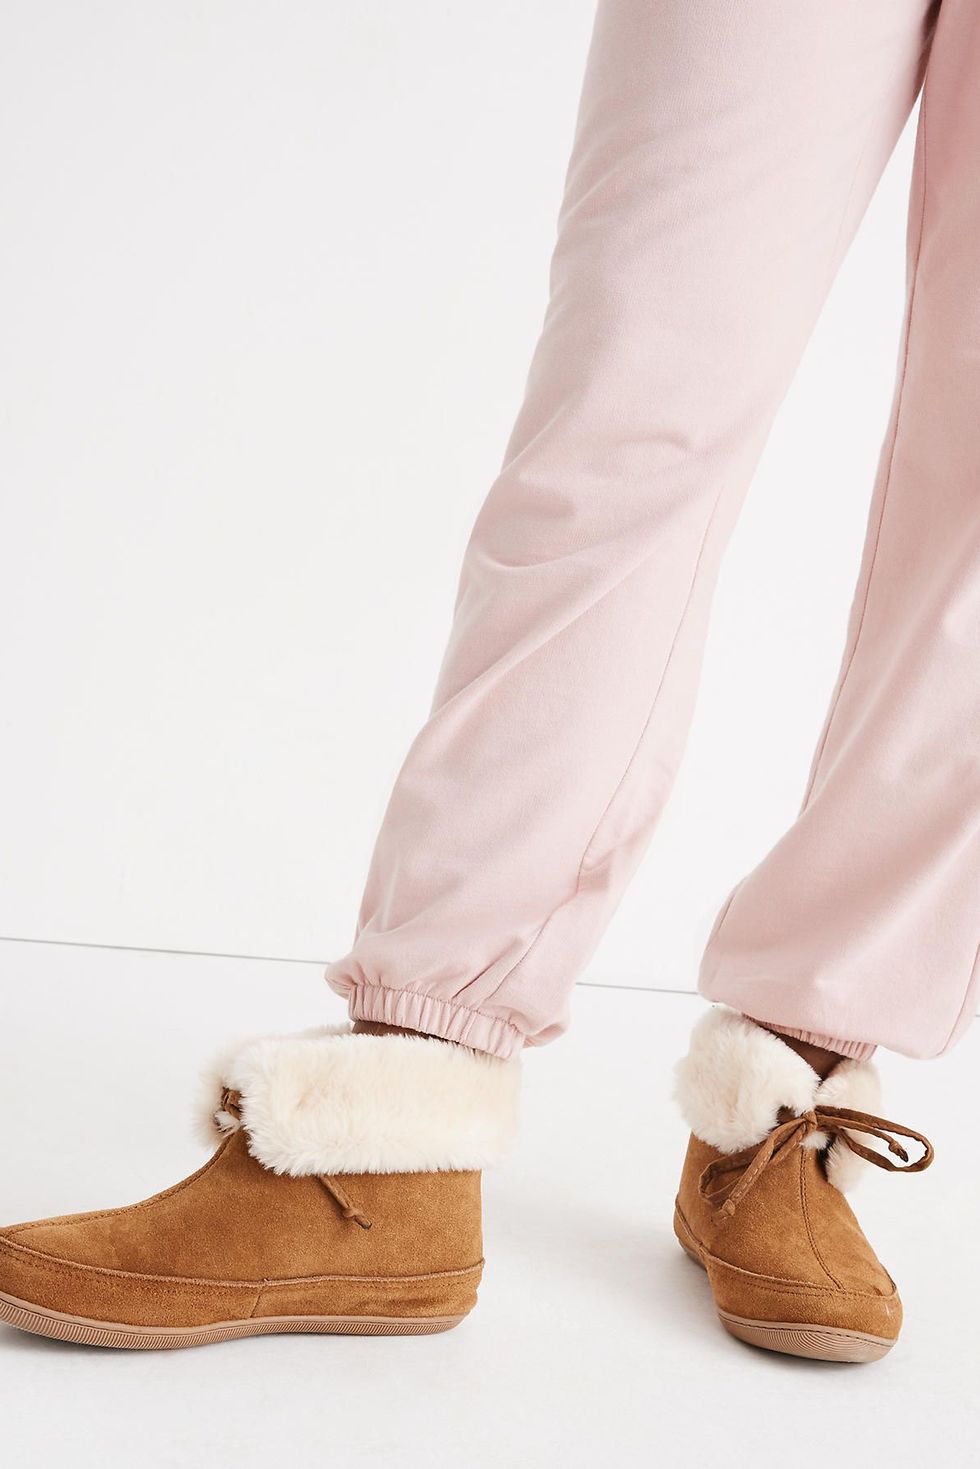 18 Best Women's Slippers to Shop in 2022